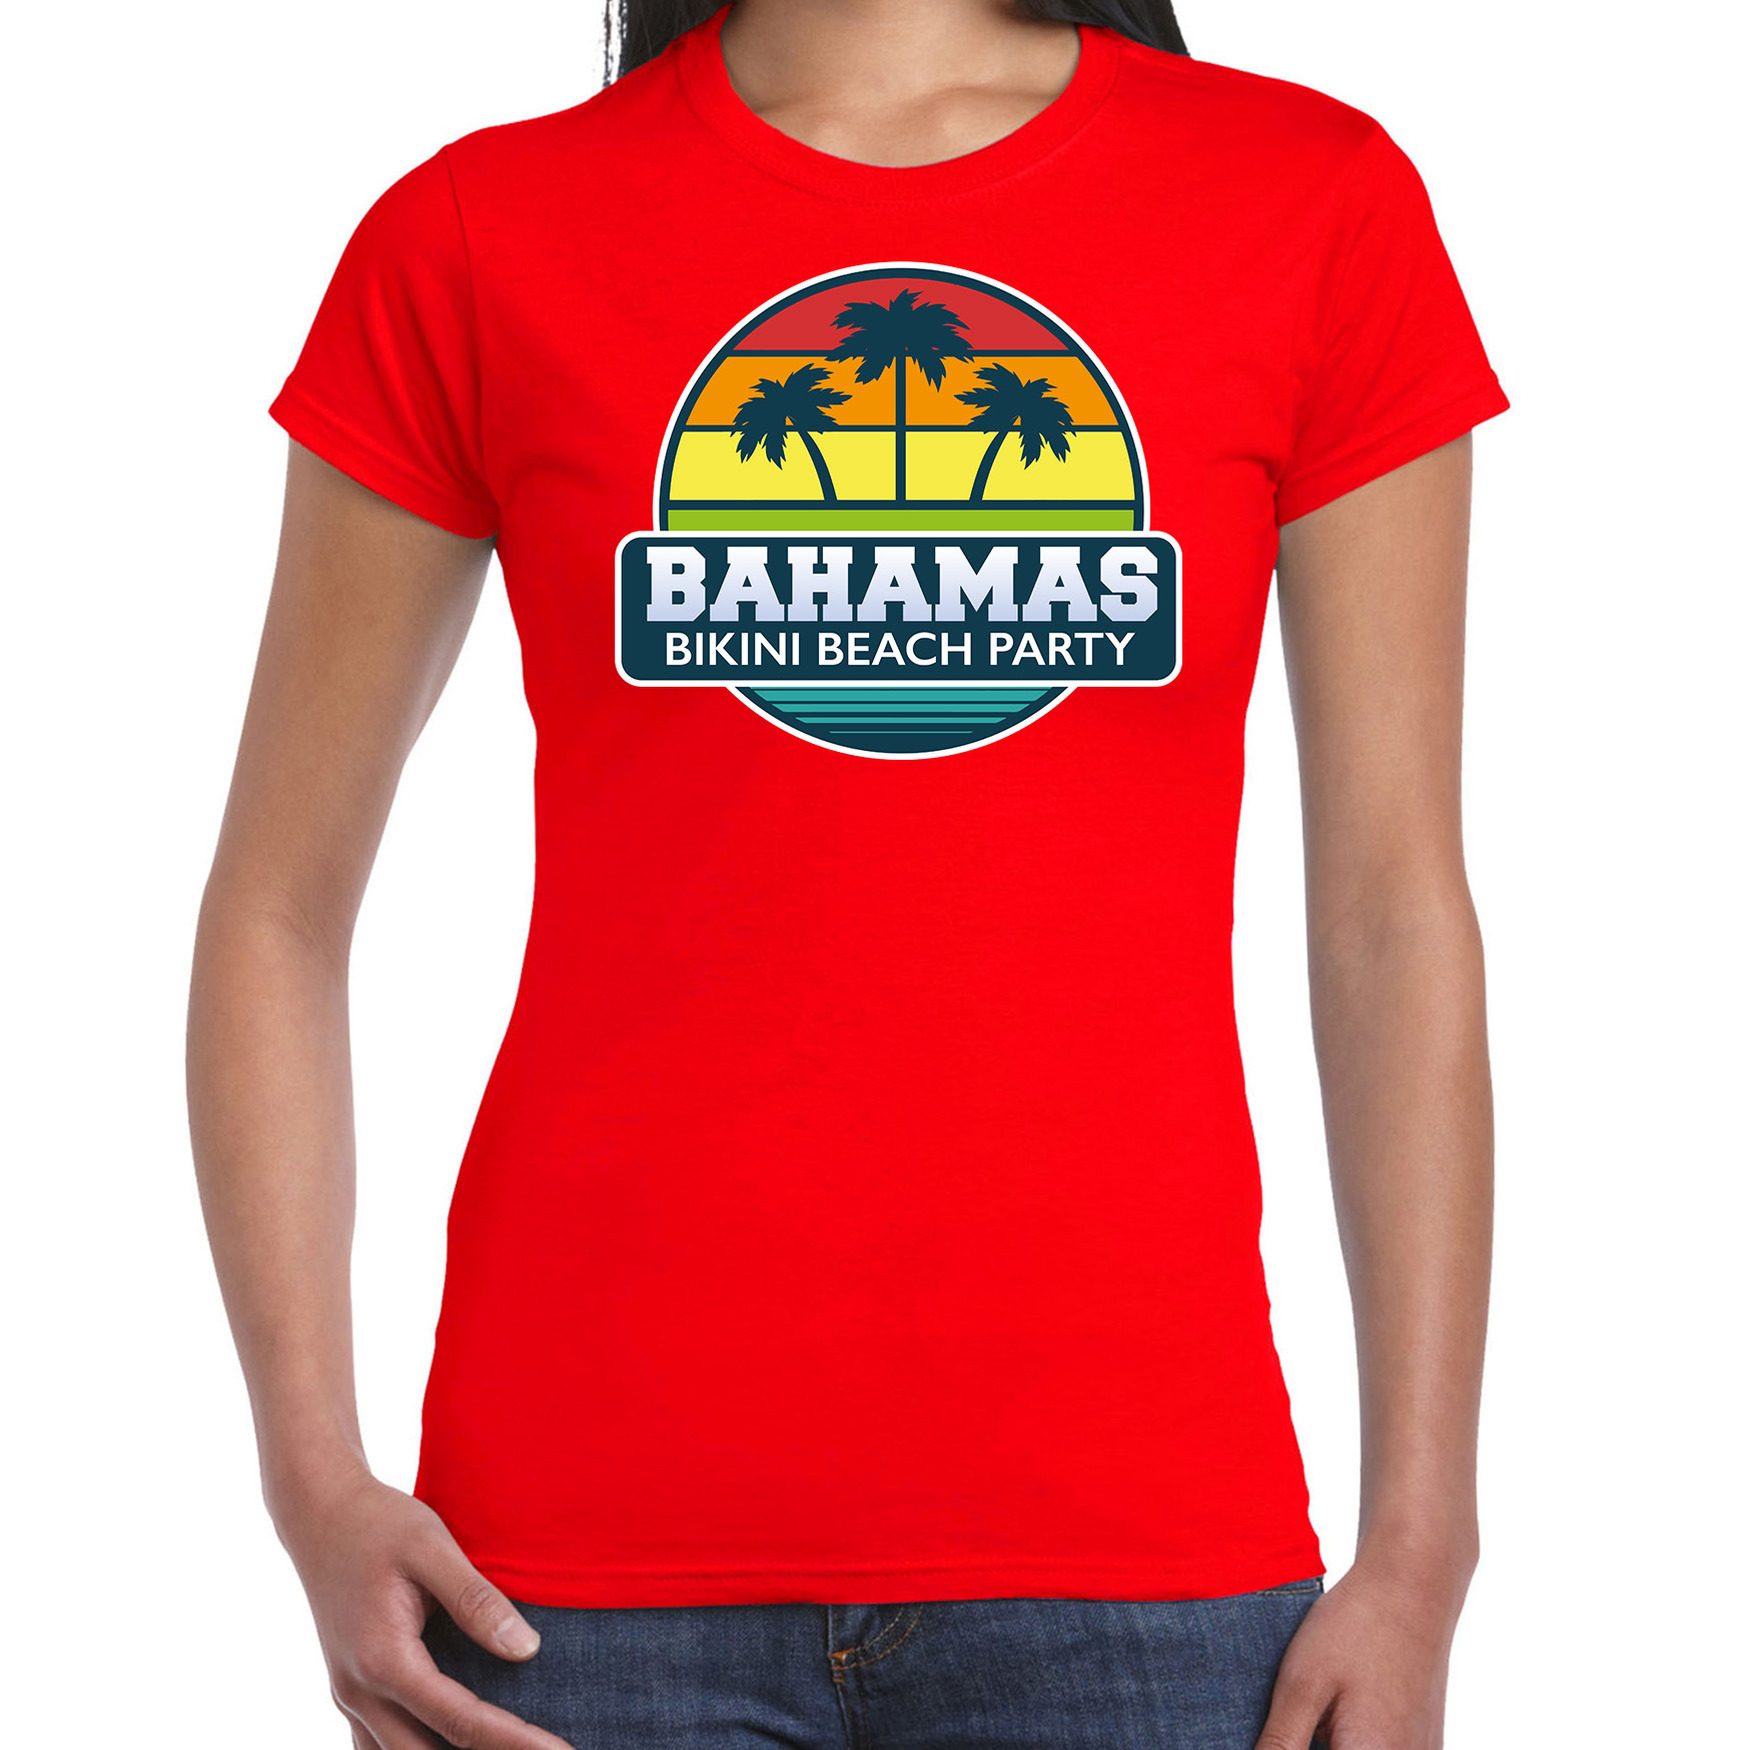 Bahamas zomer t-shirt - shirt Bahamas bikini beach party rood voor dames